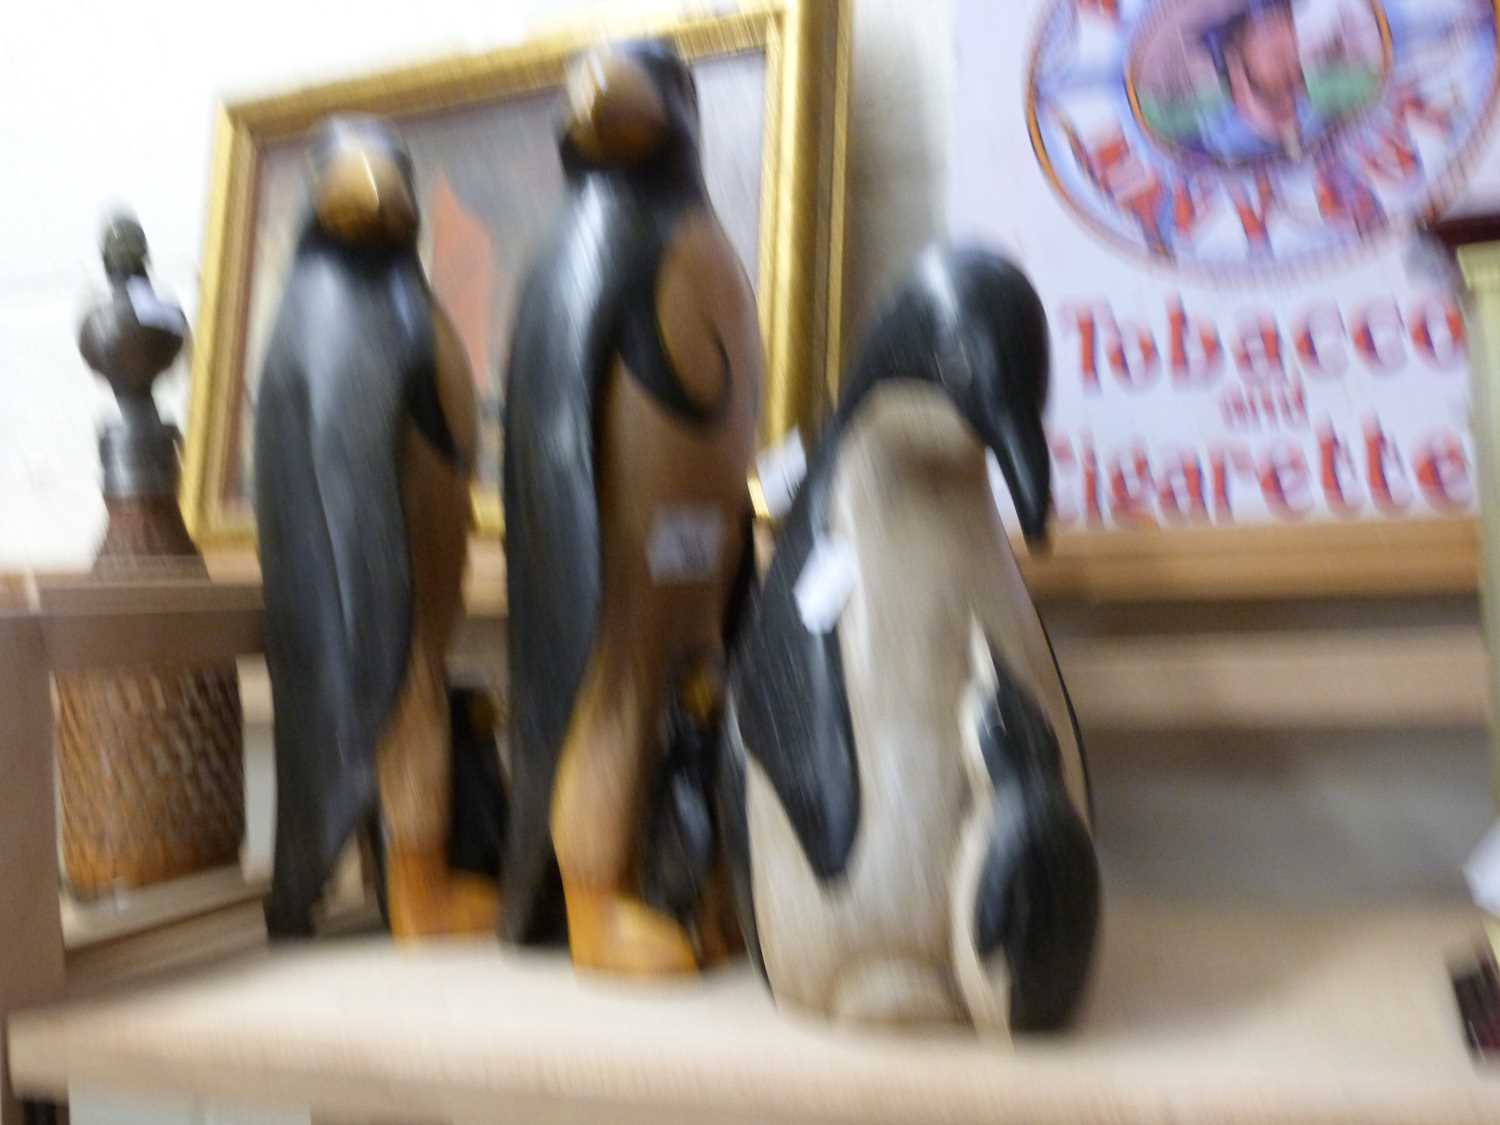 Three modern wooden models of penguins